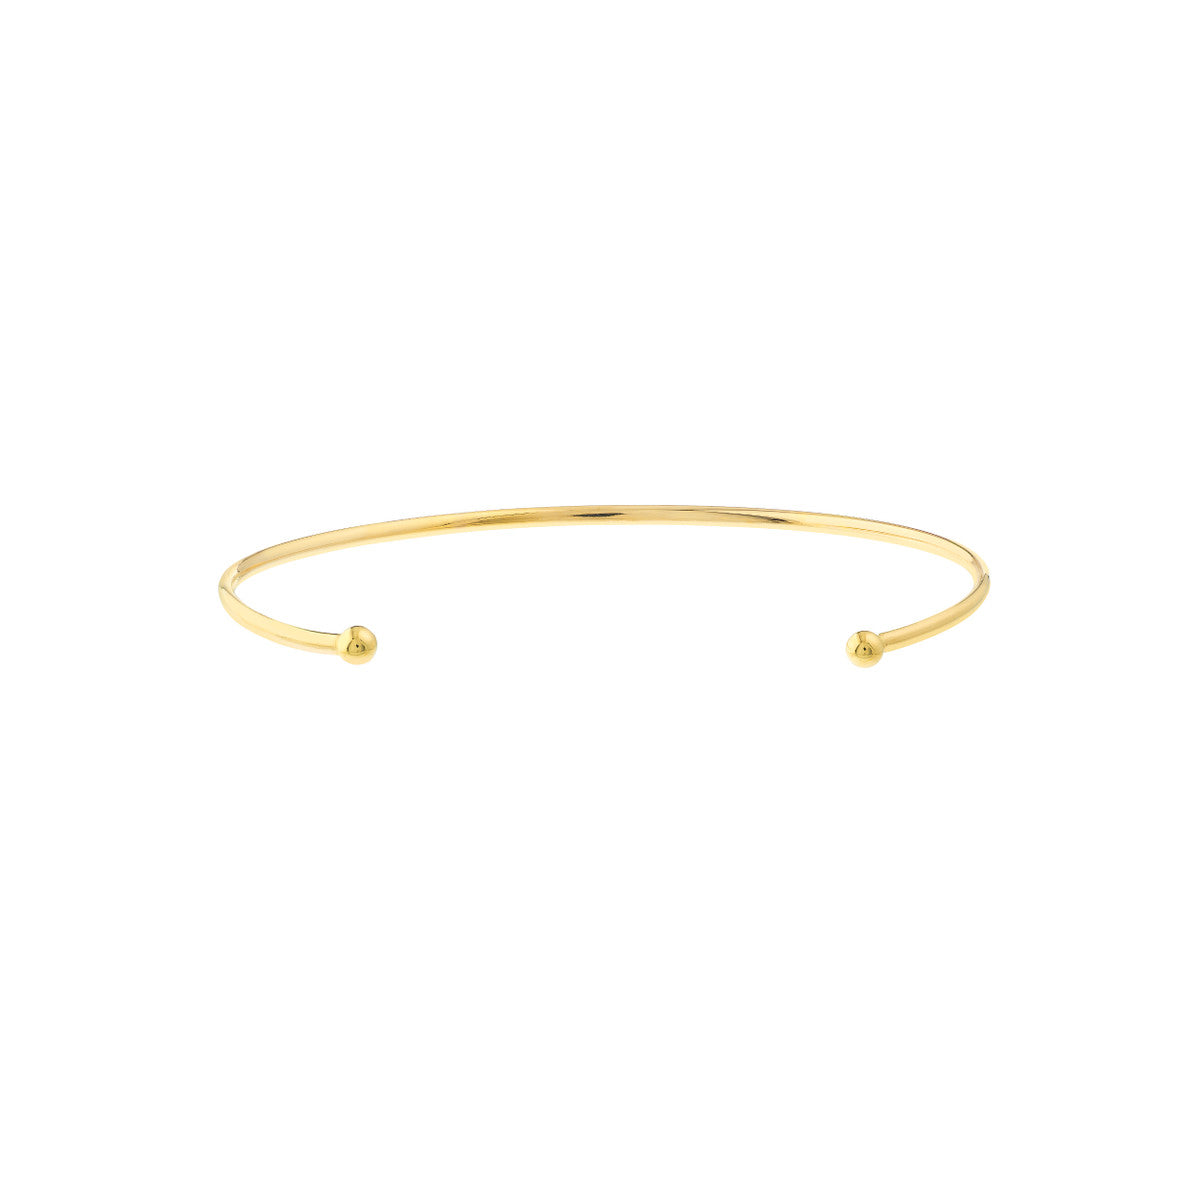 14k Yellow Gold Cuff Bracelet